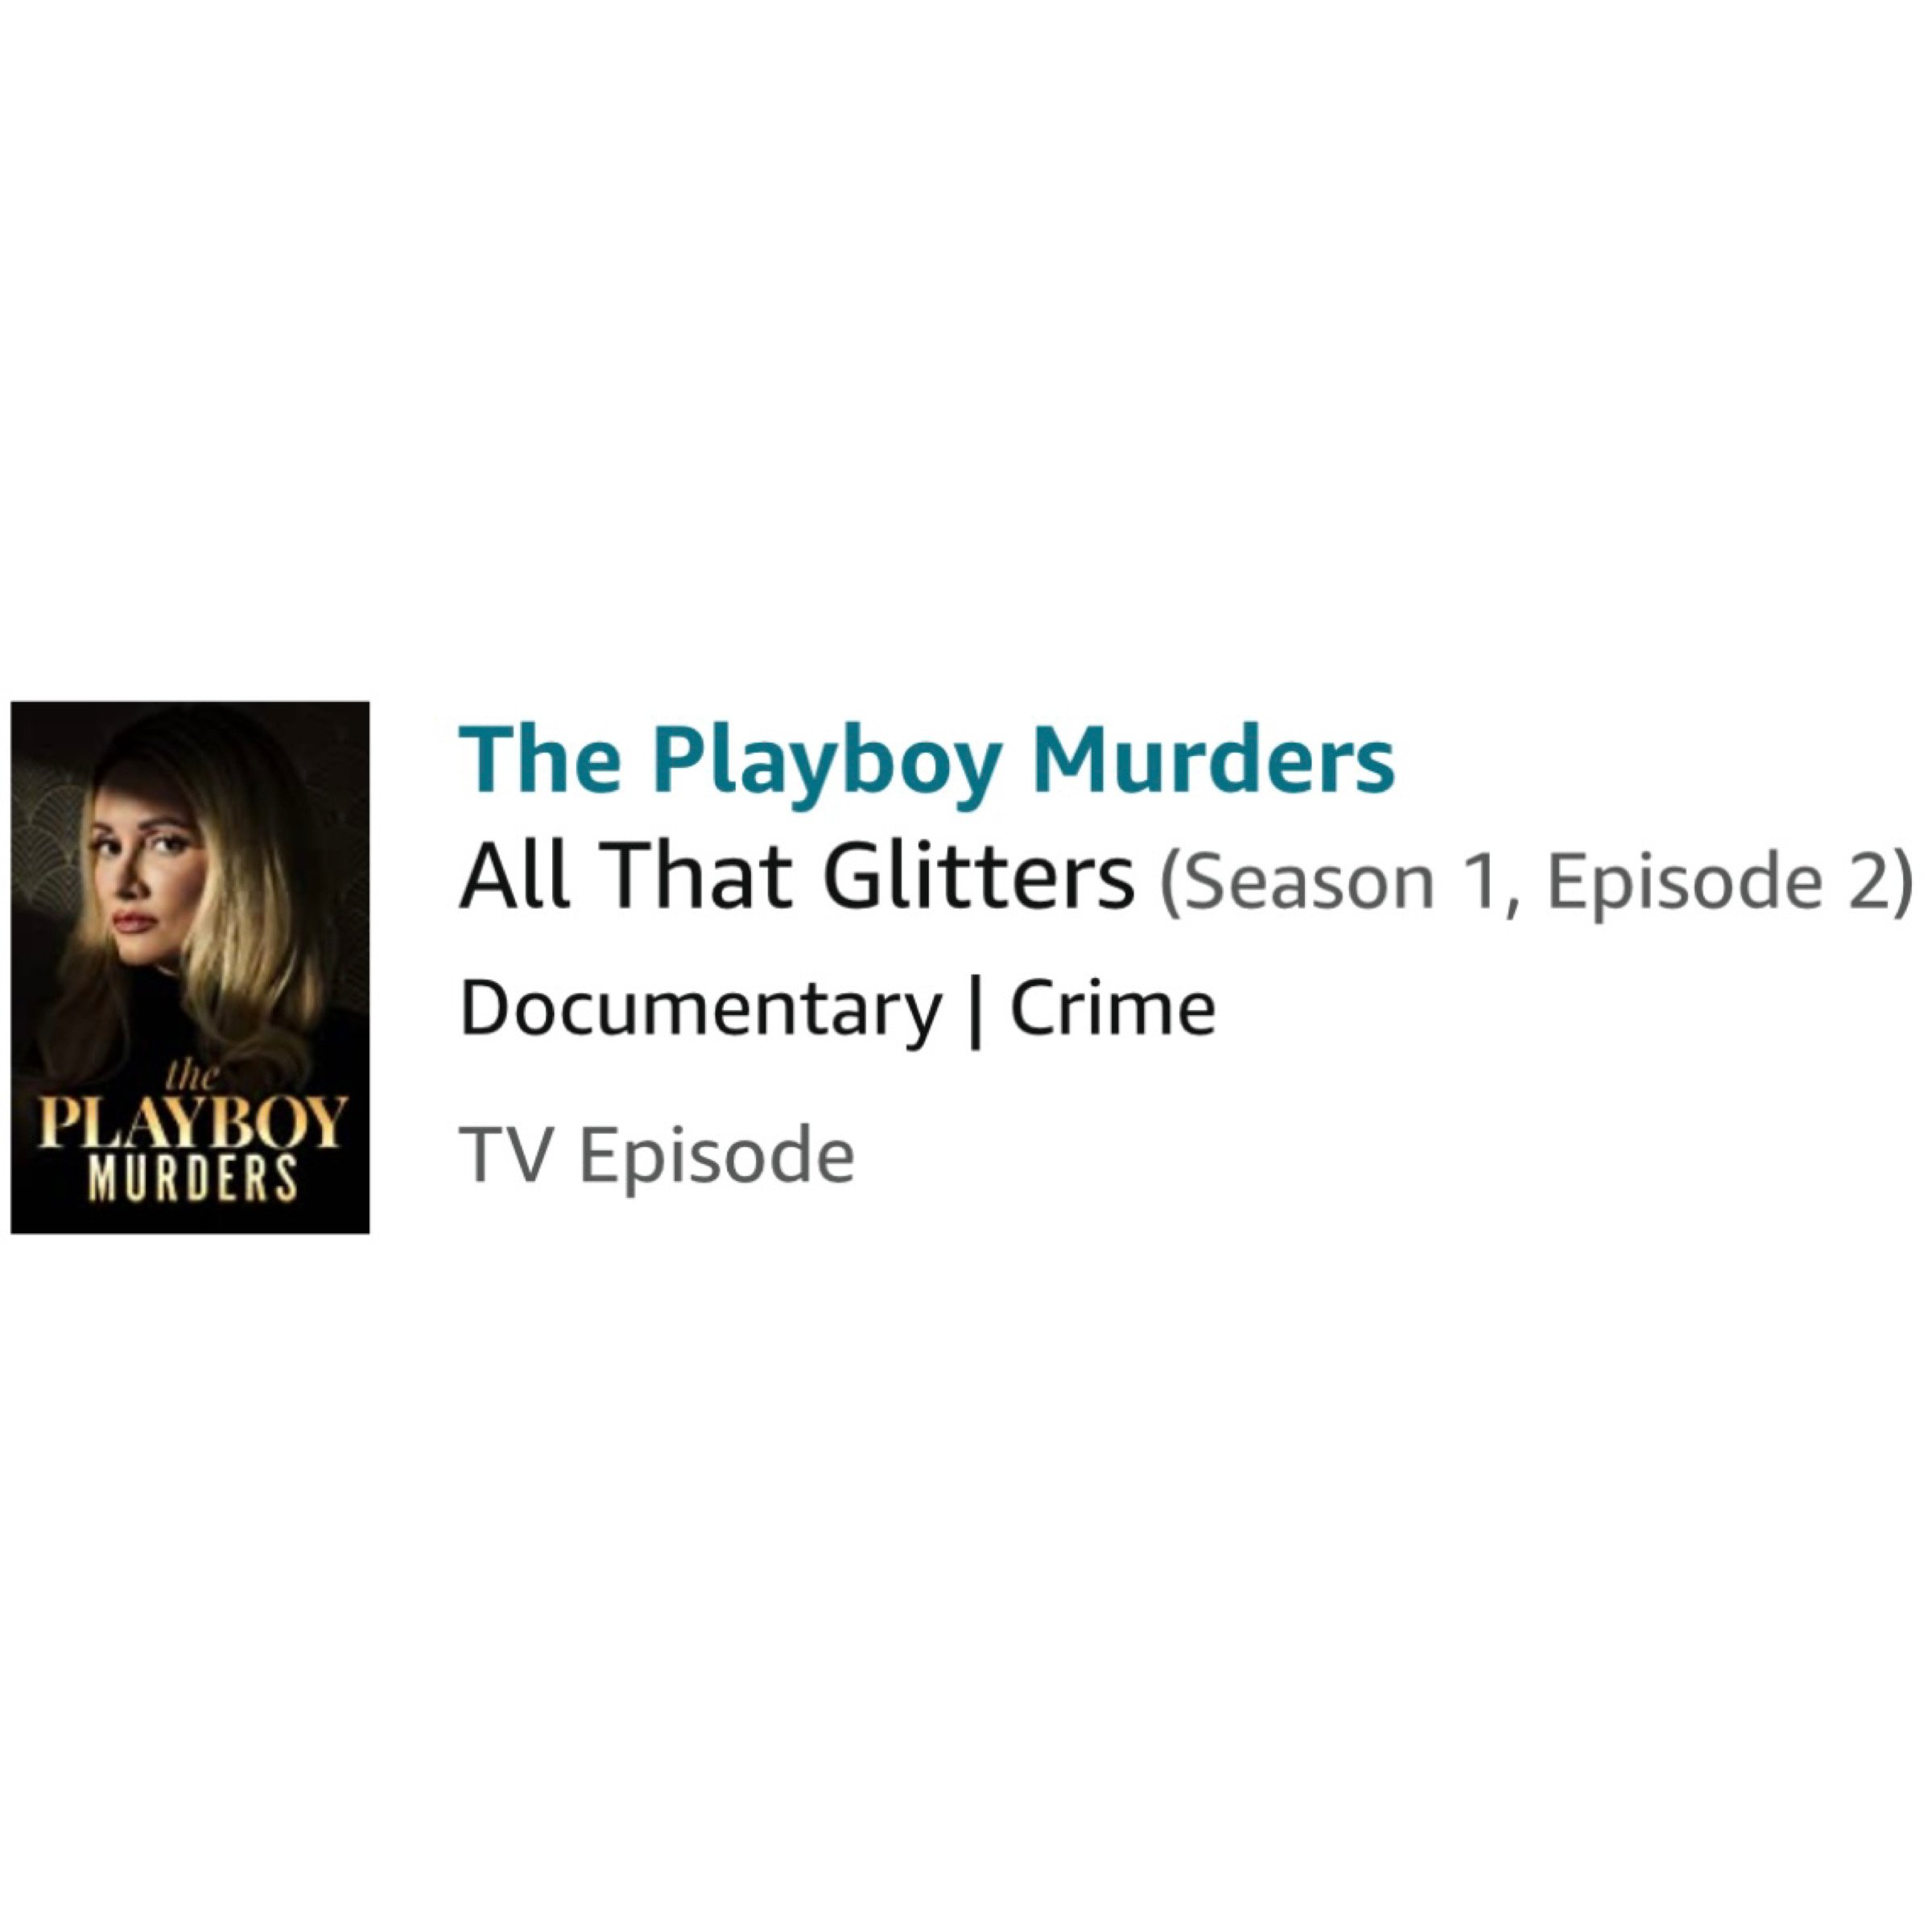 The Playboy Murders - Season 1, Episode 2 - All that Glitters